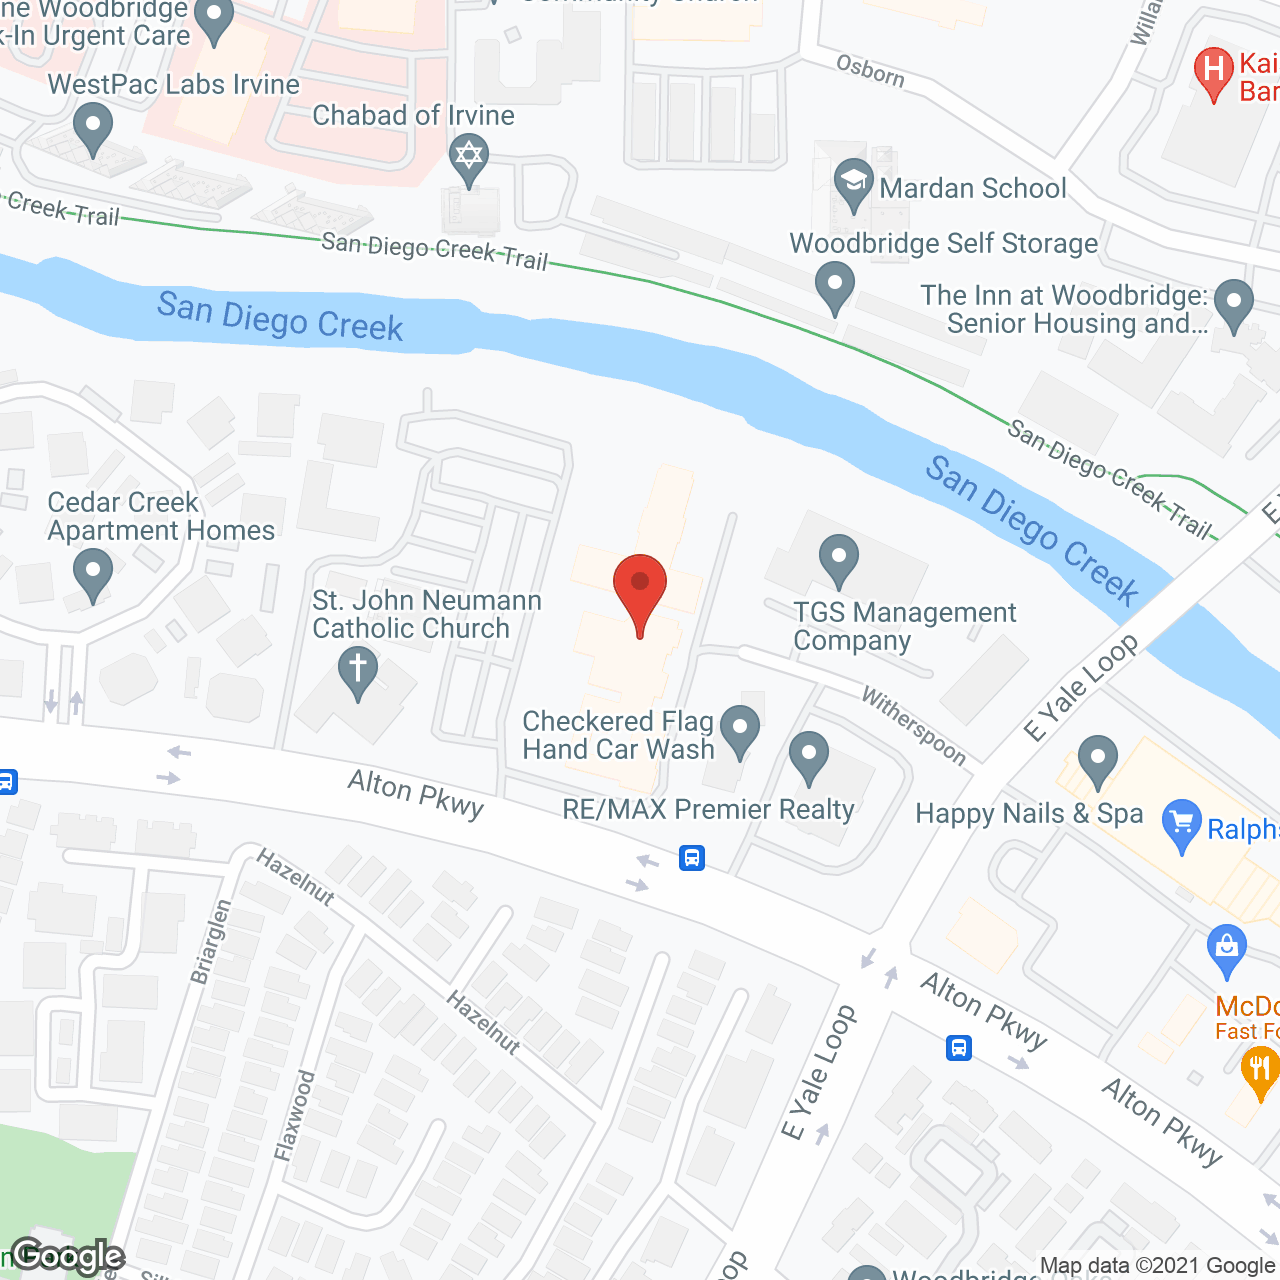 Woodbridge Terrace of Irvine in google map